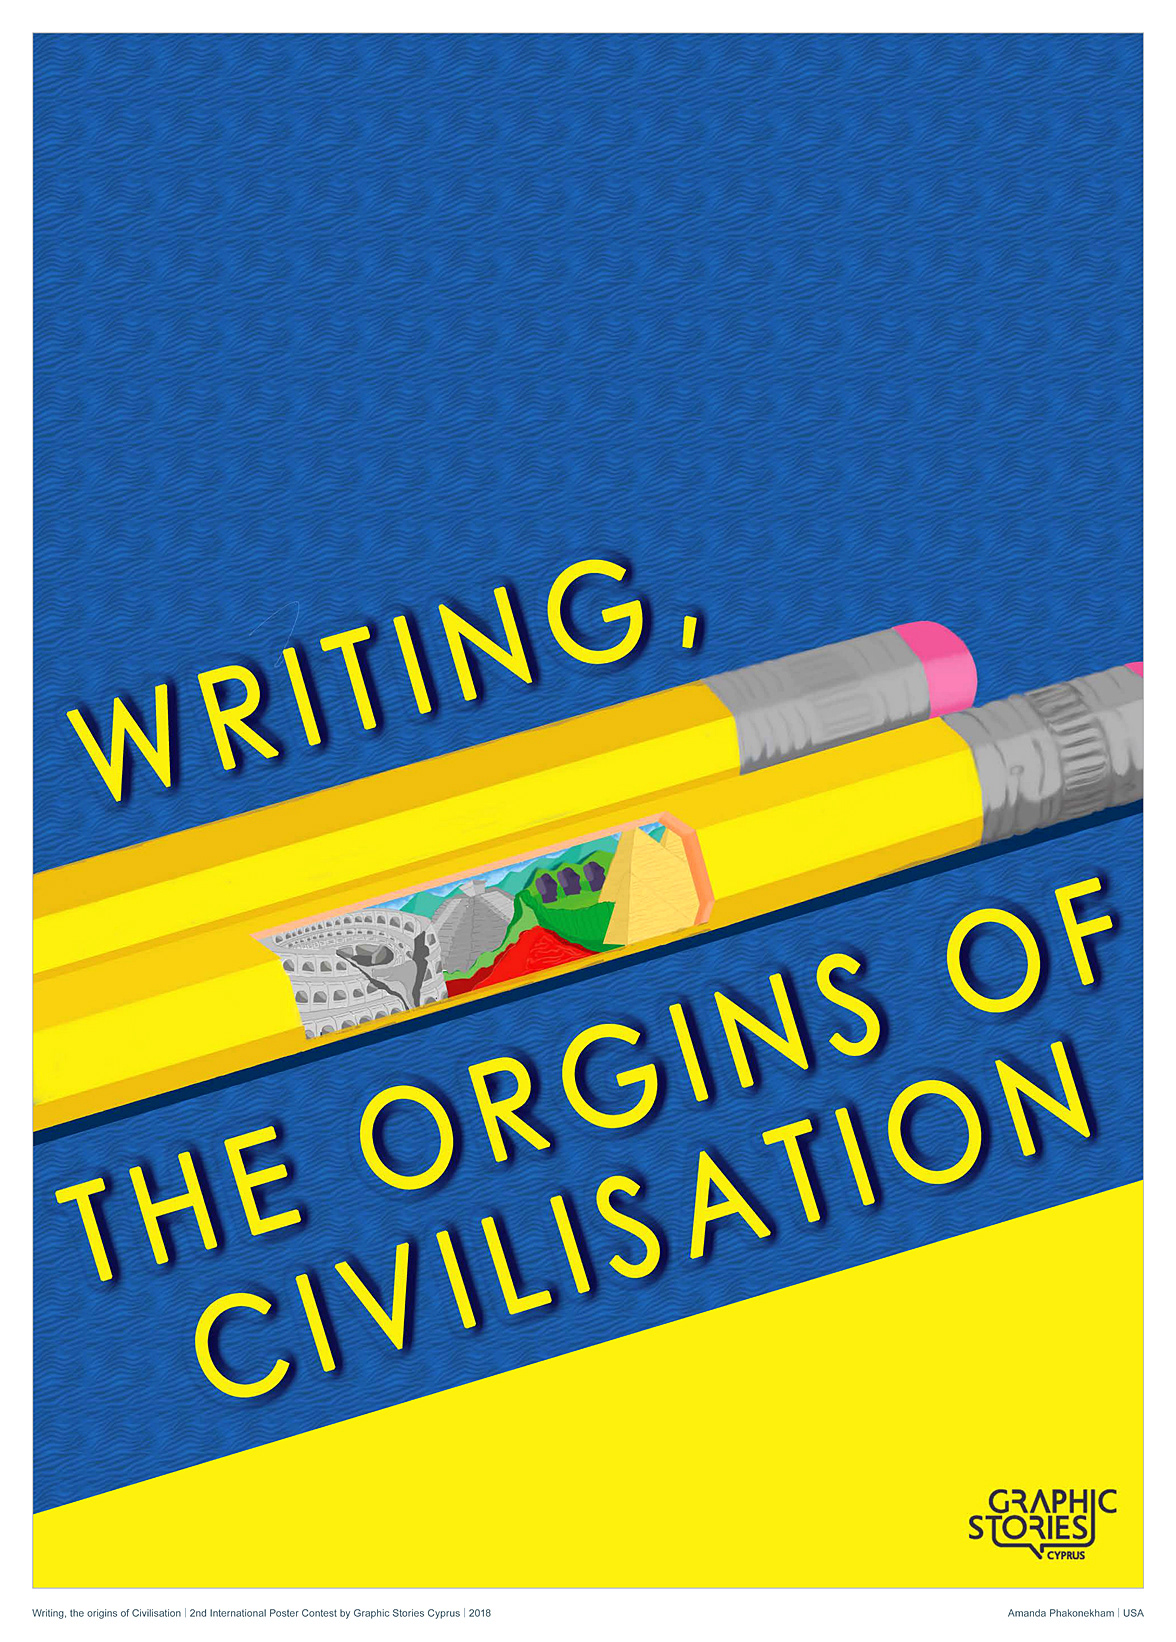 writing  origins civilisation Civilization poster exhibition cyprus Graphic Stories Cyprus